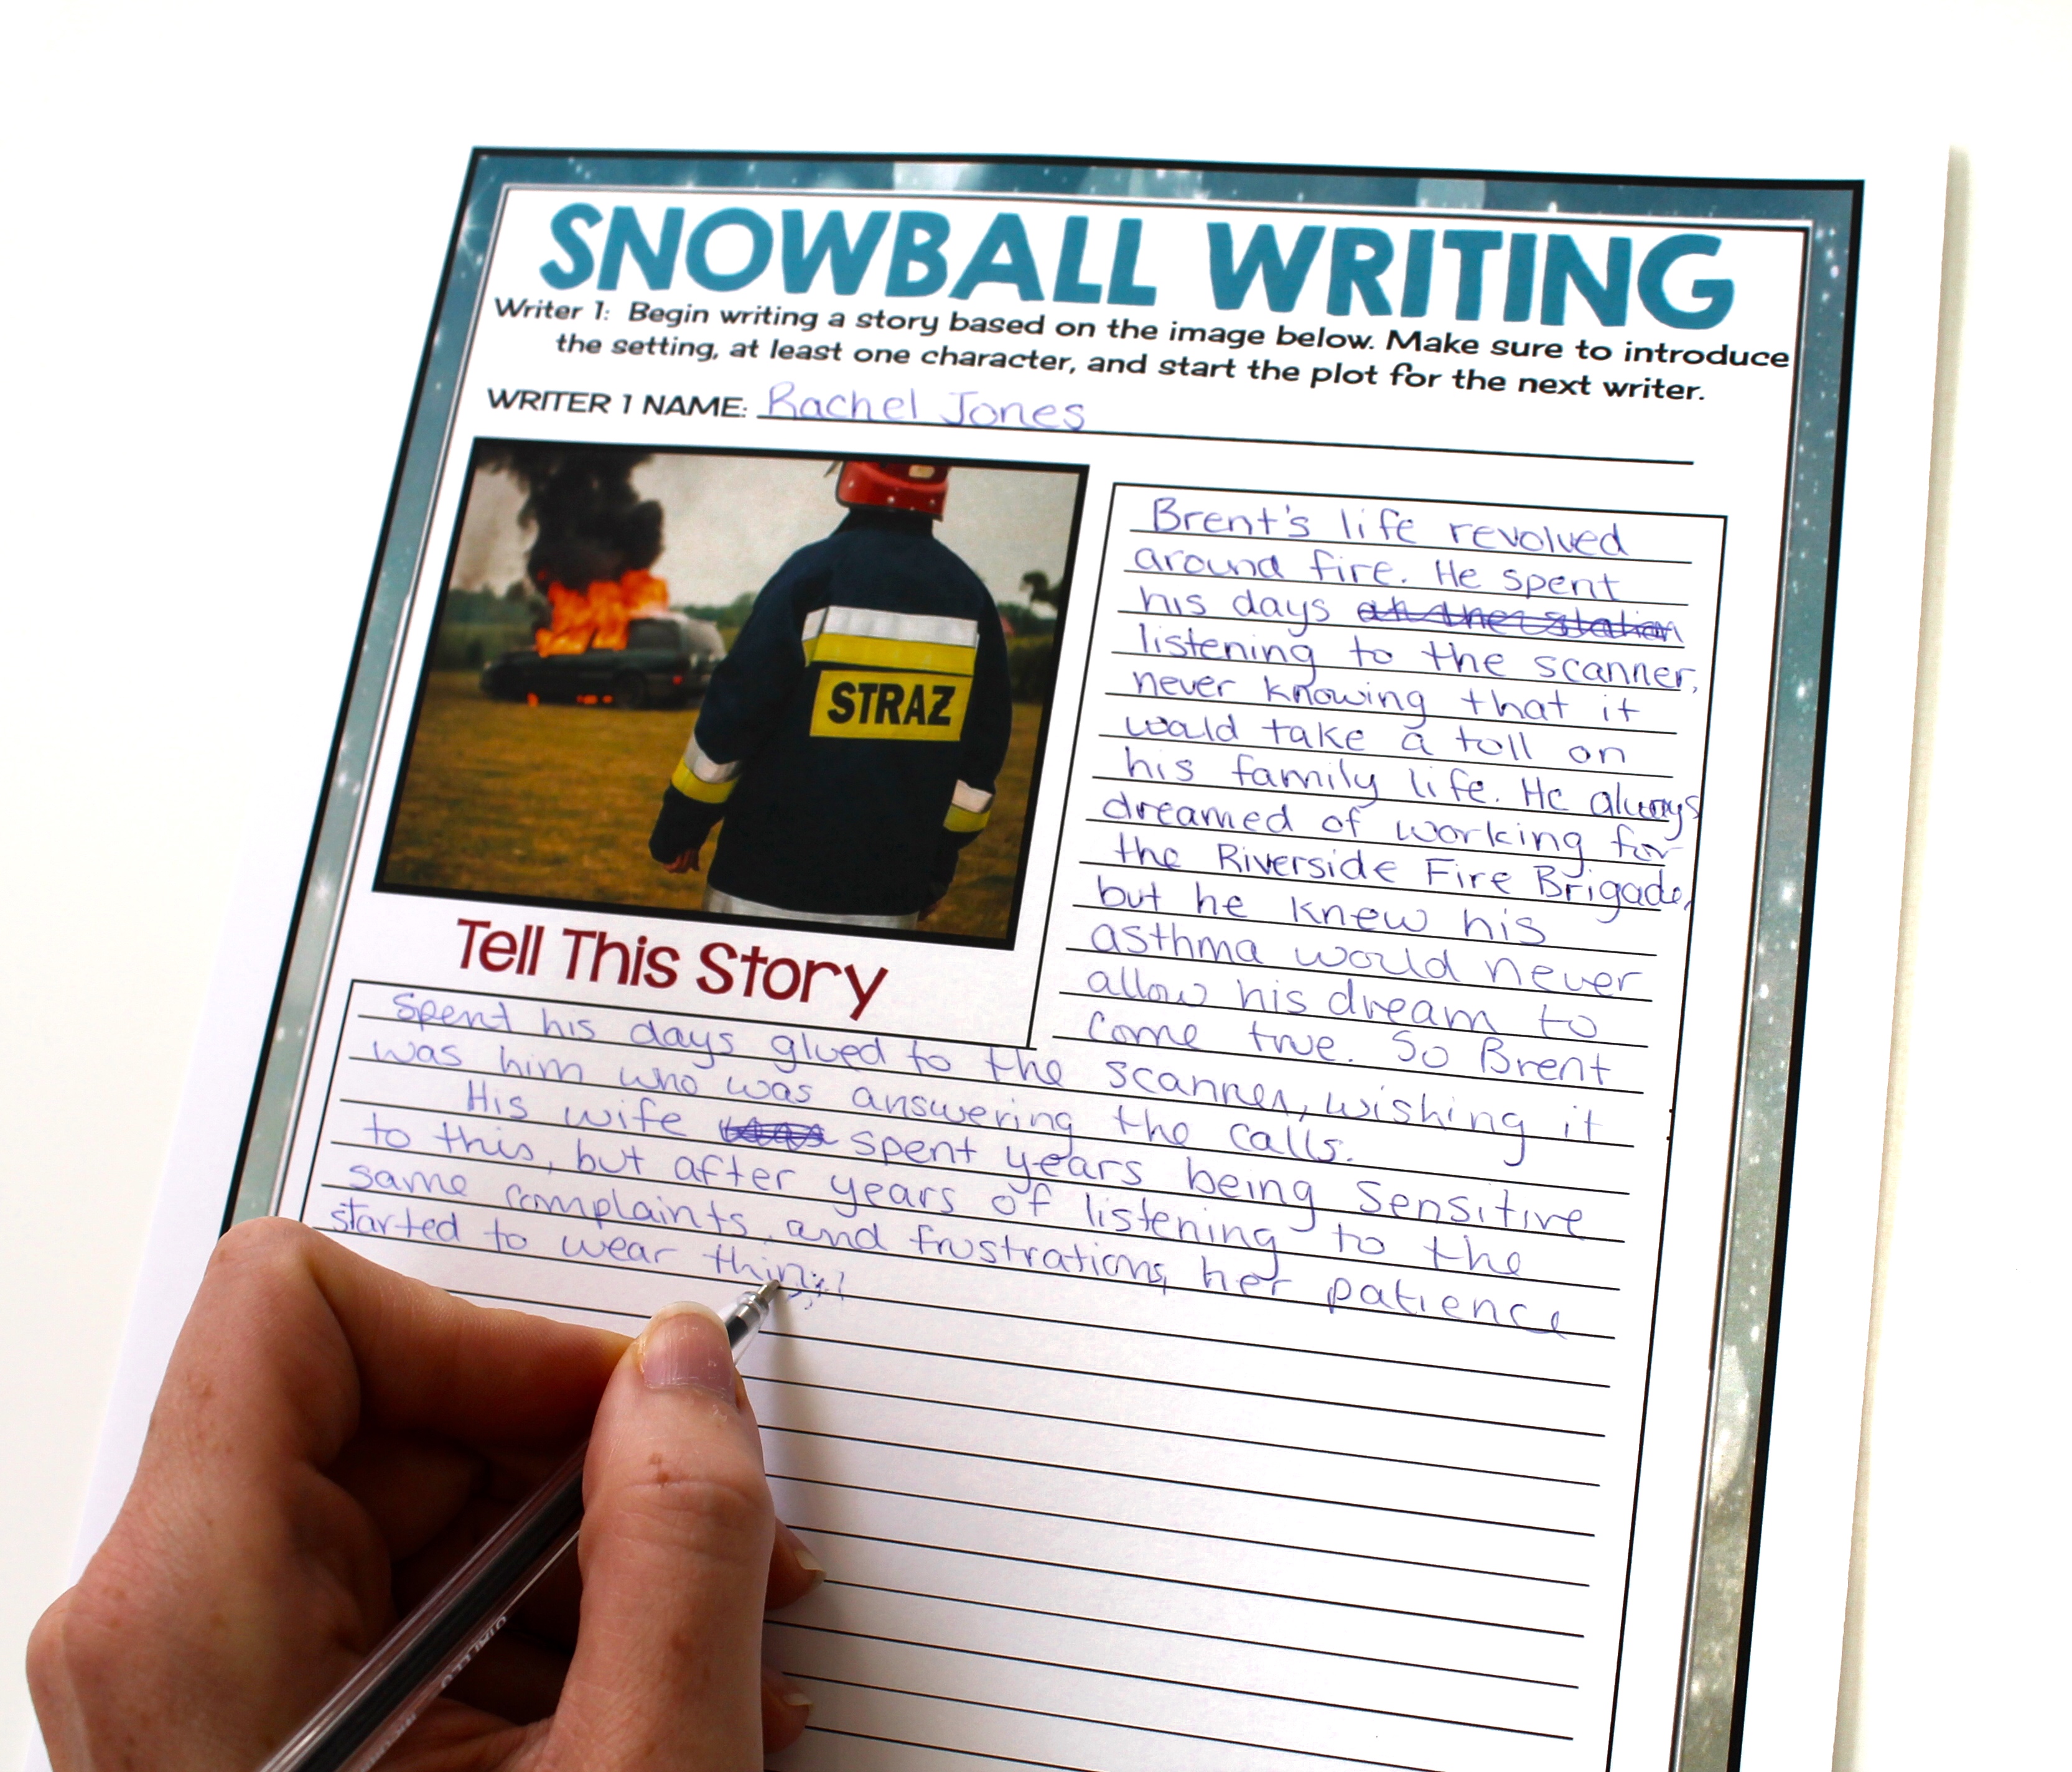 Snowball writing collaborative writing activity